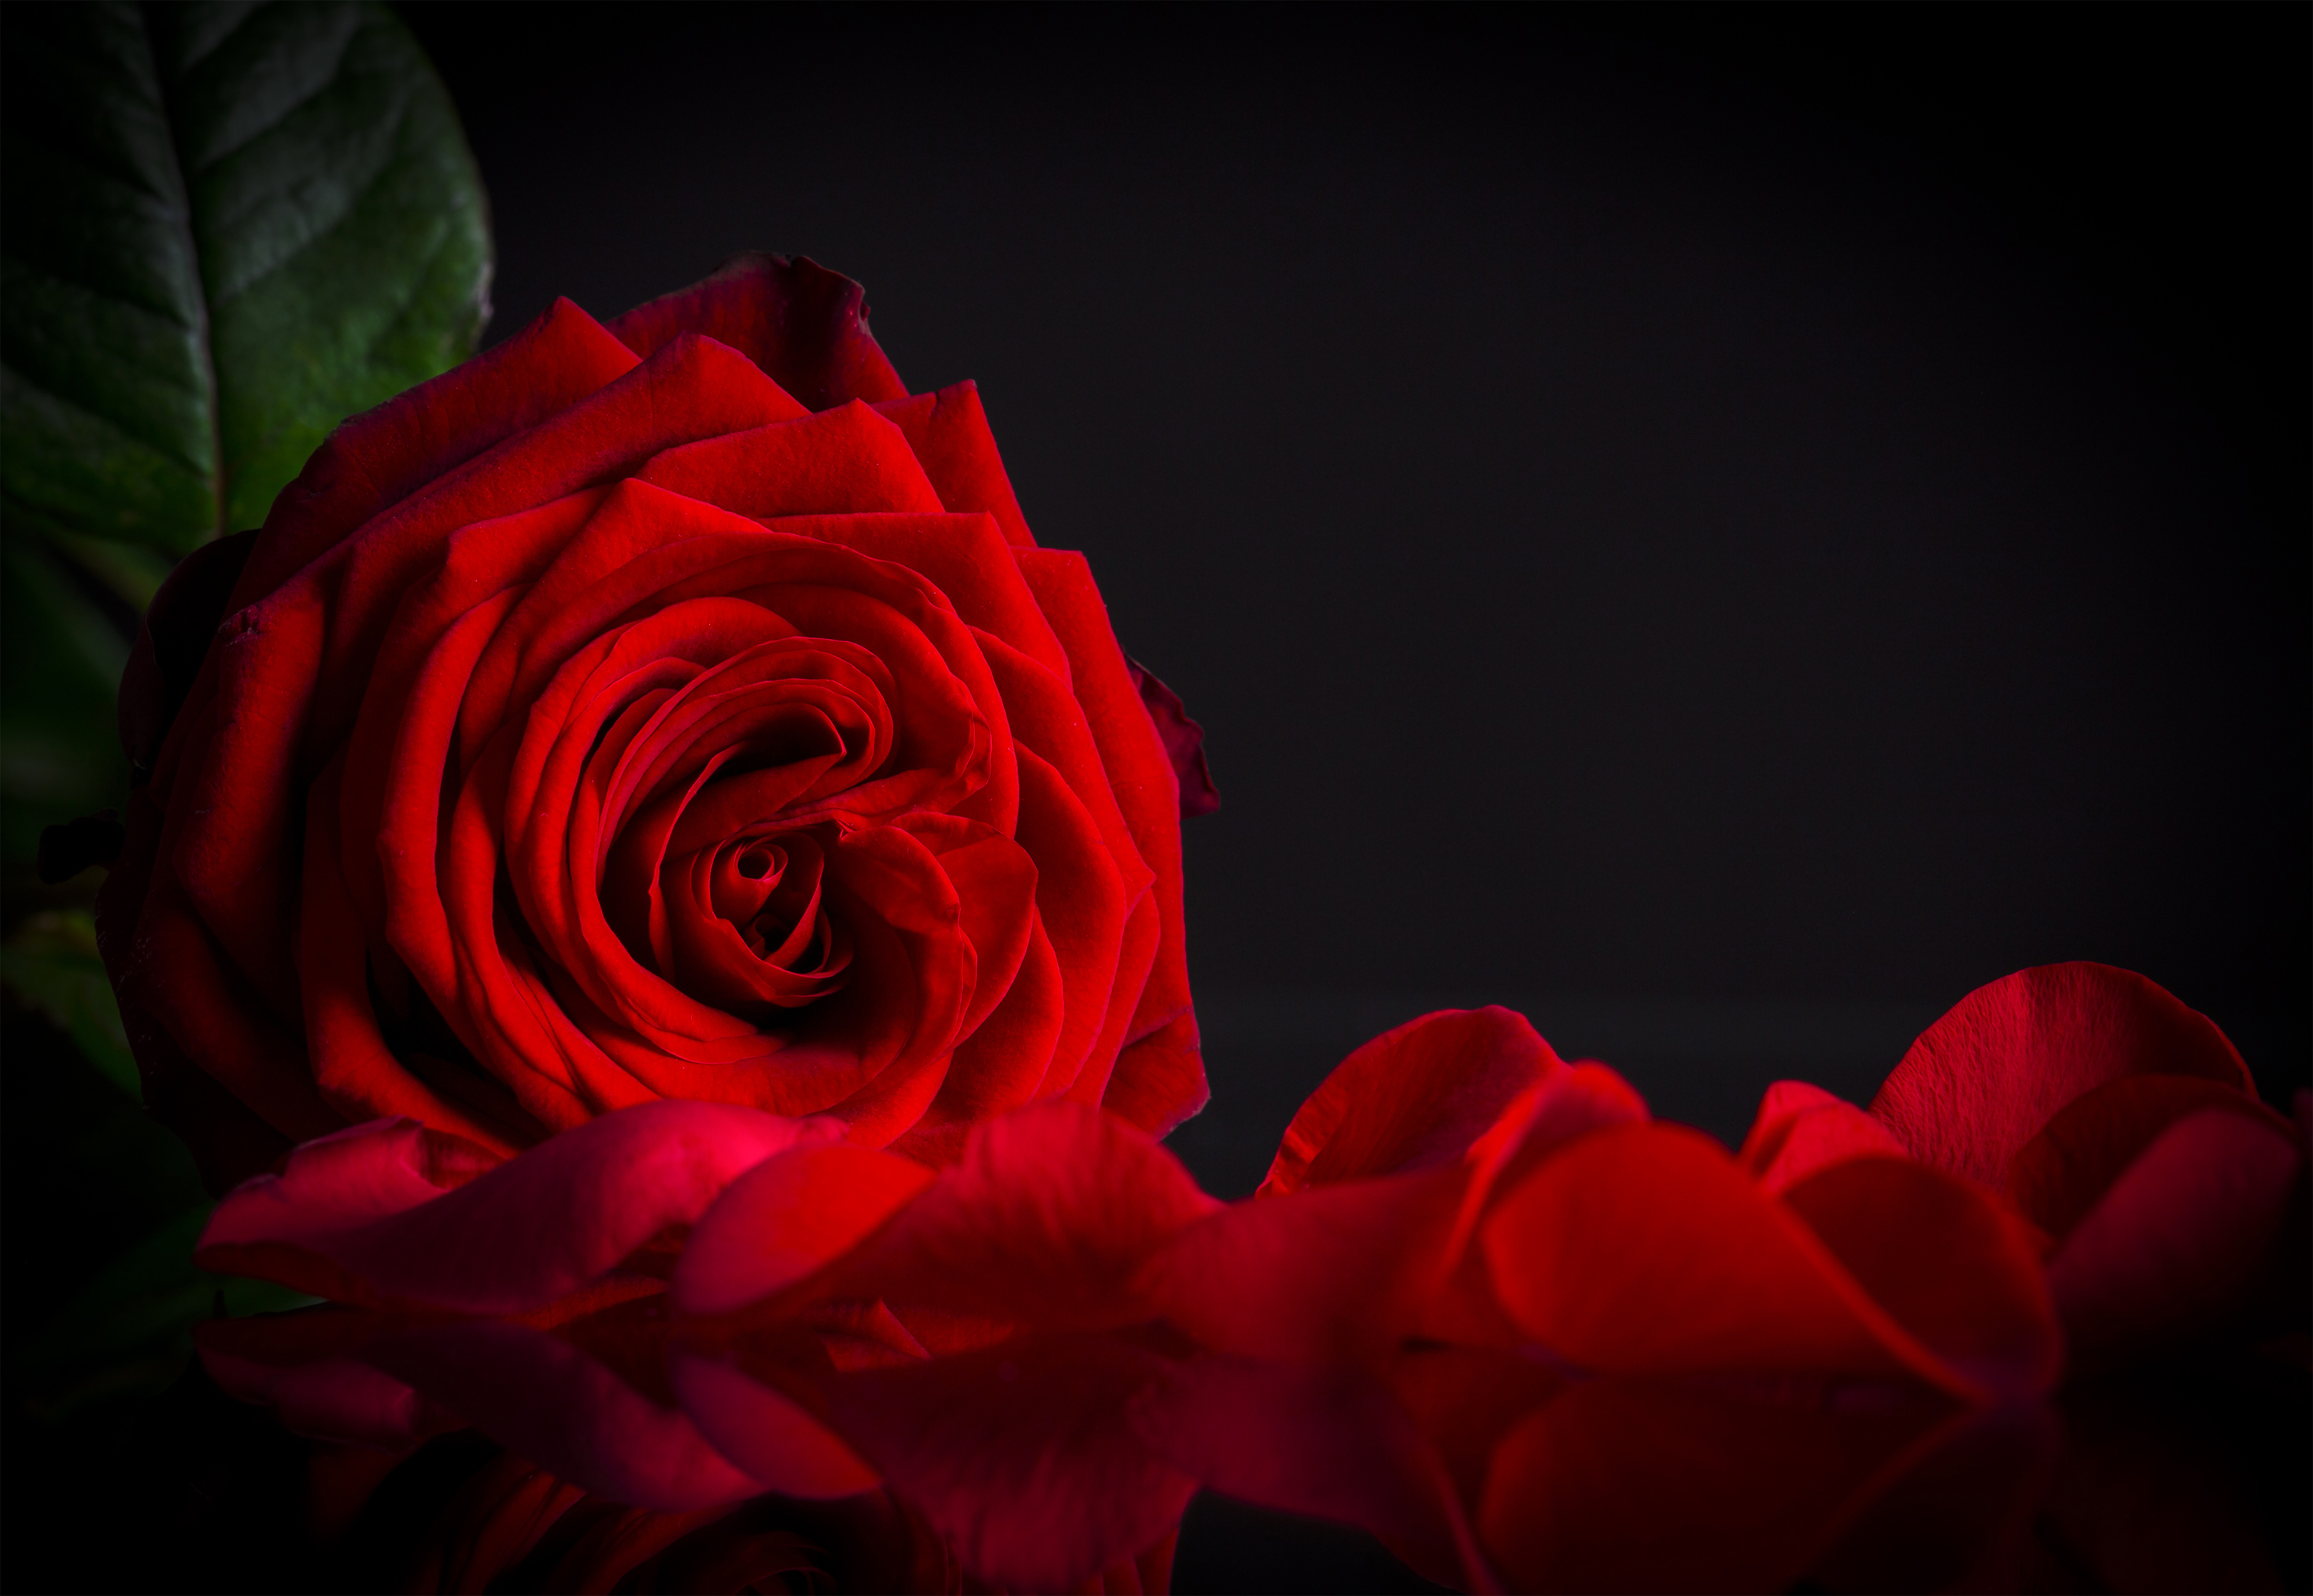 [69+] Red Rose On Black Background | Wallpapersafari.com